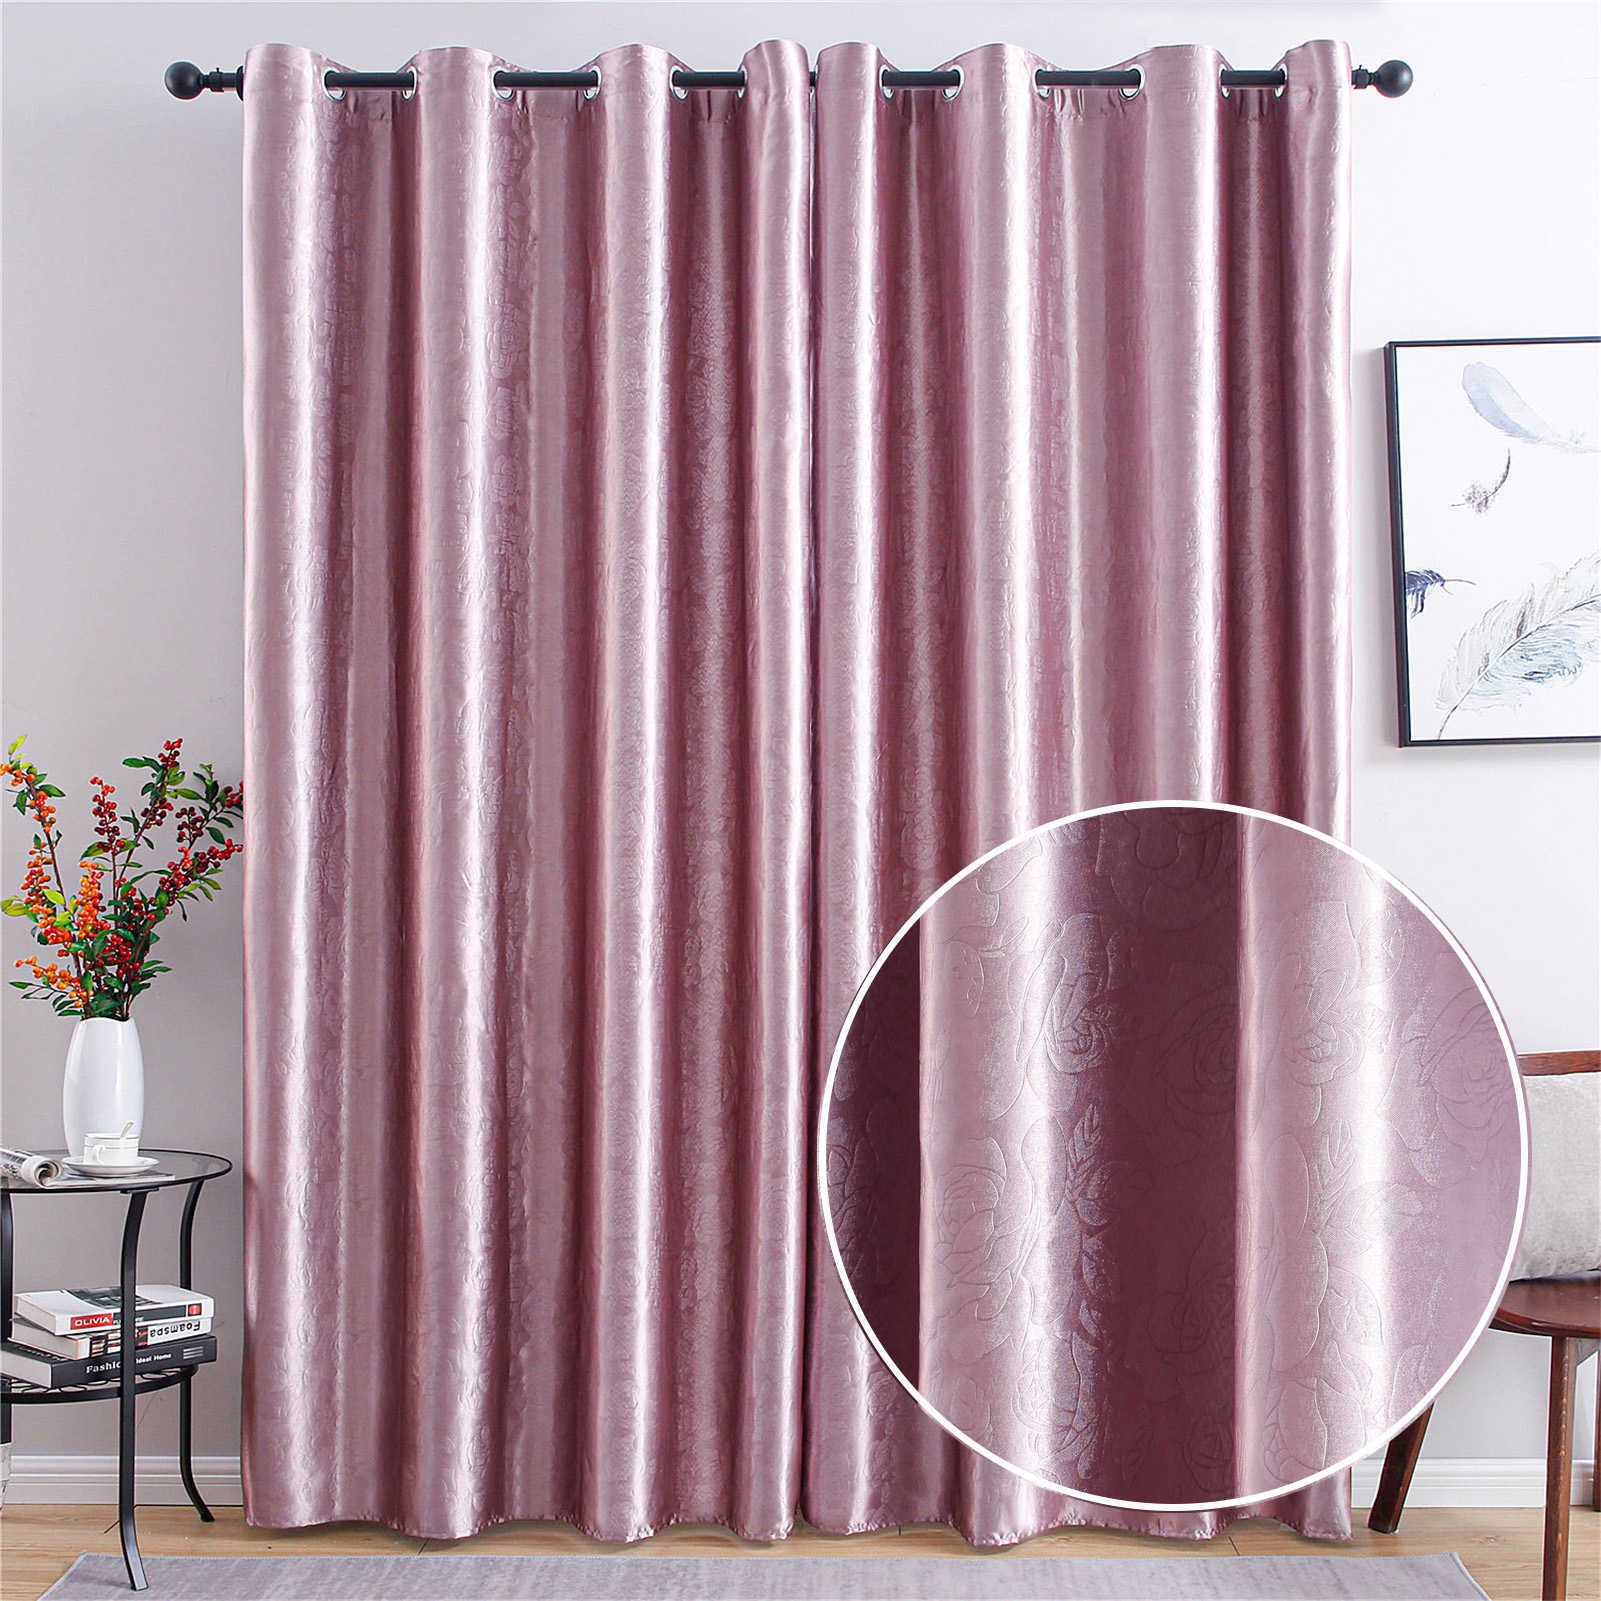 Purple Curtain